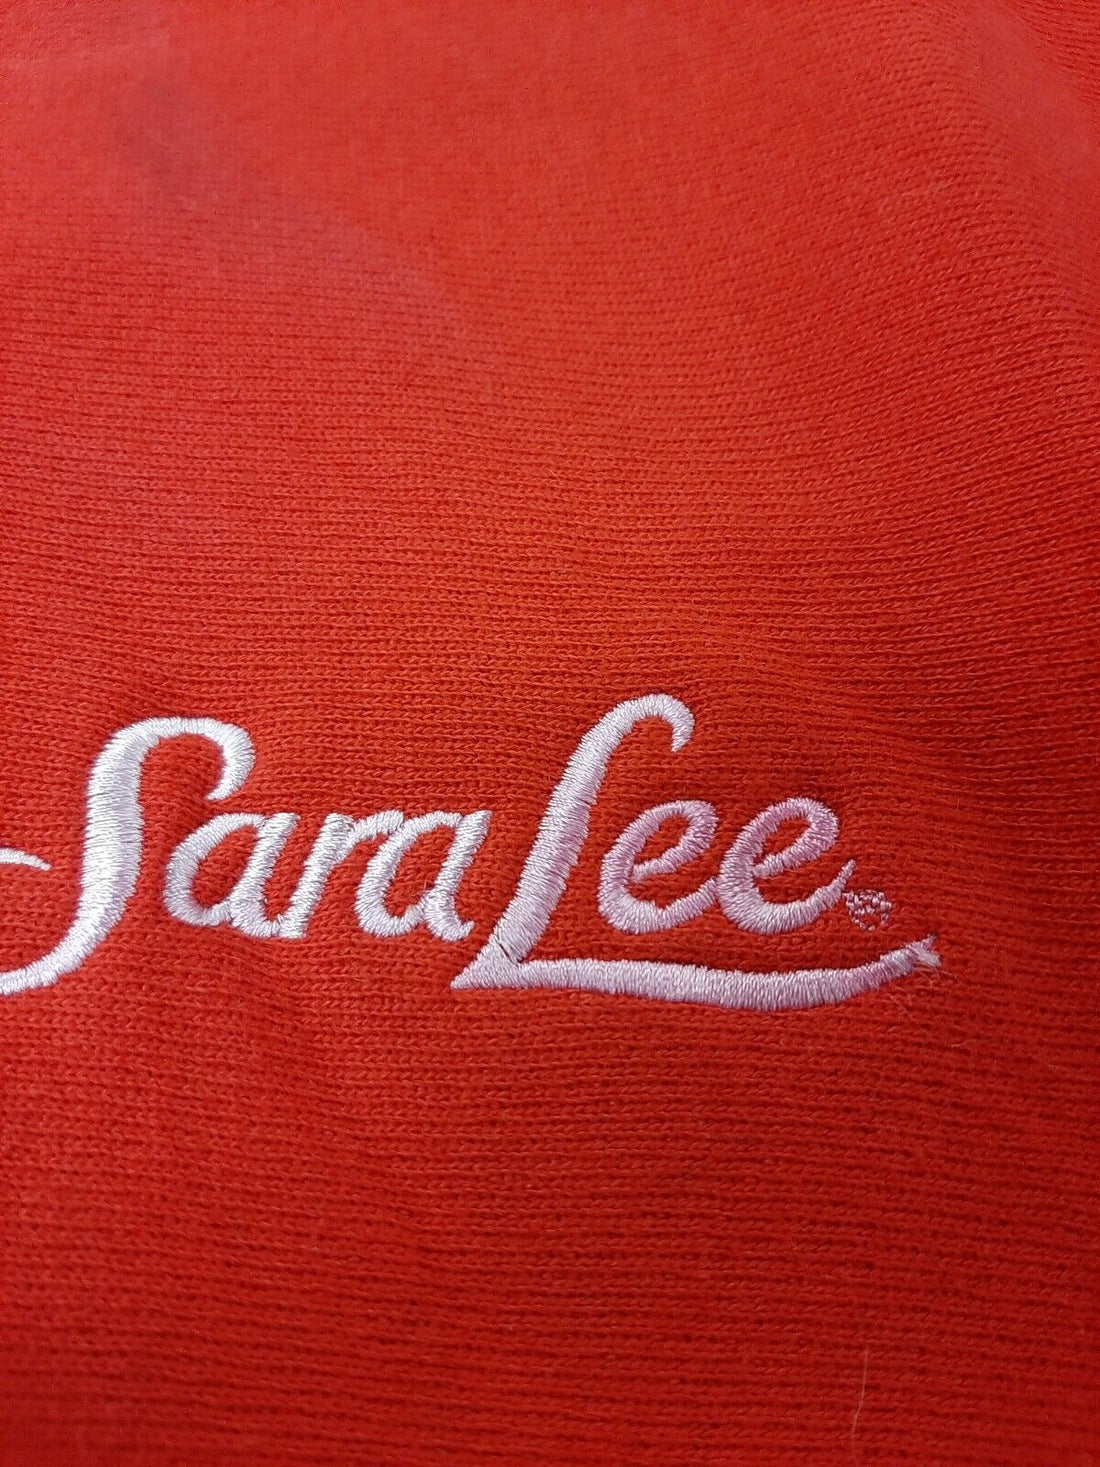 Vintage Sara Lee Champion Reverse Weave Sweatshirt Crewneck Size XL 90s Snack